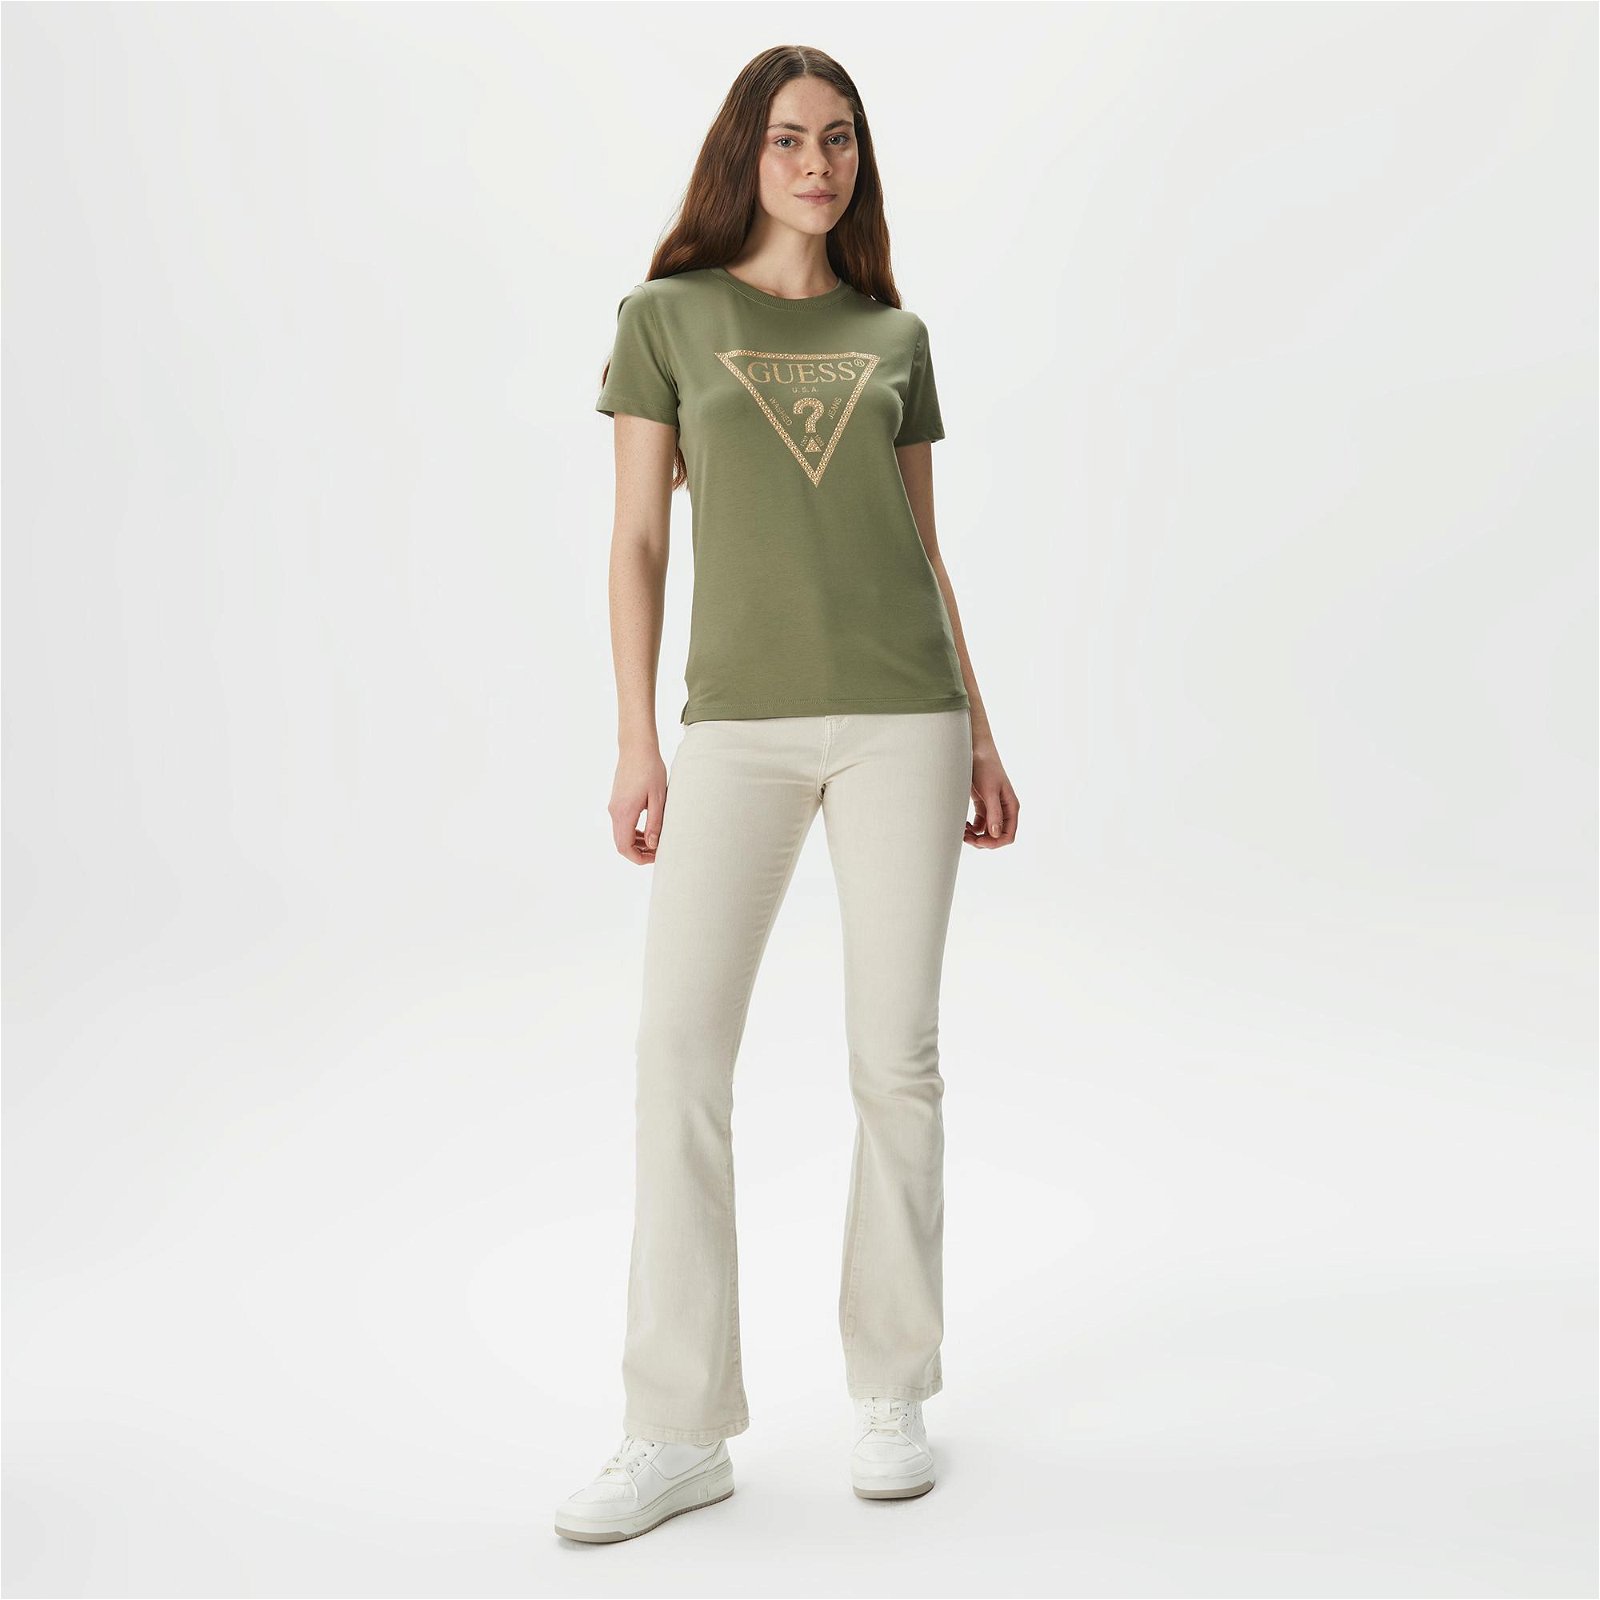 Guess Ss CN Gold Triangle Kadın Yeşil T-Shirt